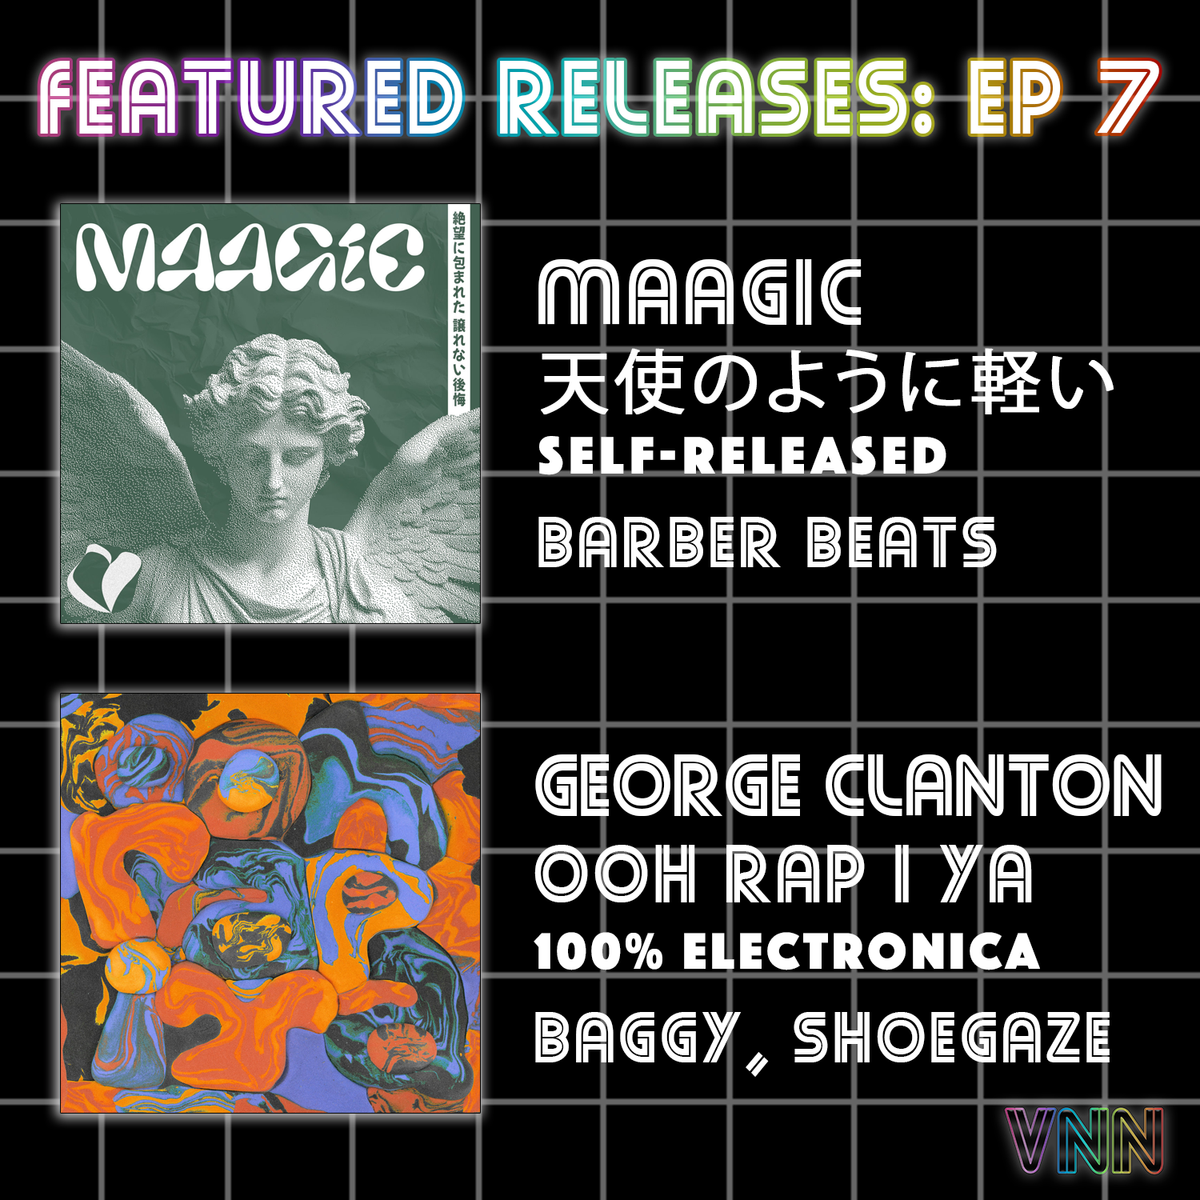 Featured Releases: MAAGIC - 天使のように軽い & George Clanton - Ooh Rap I Ya (Ep. 7)